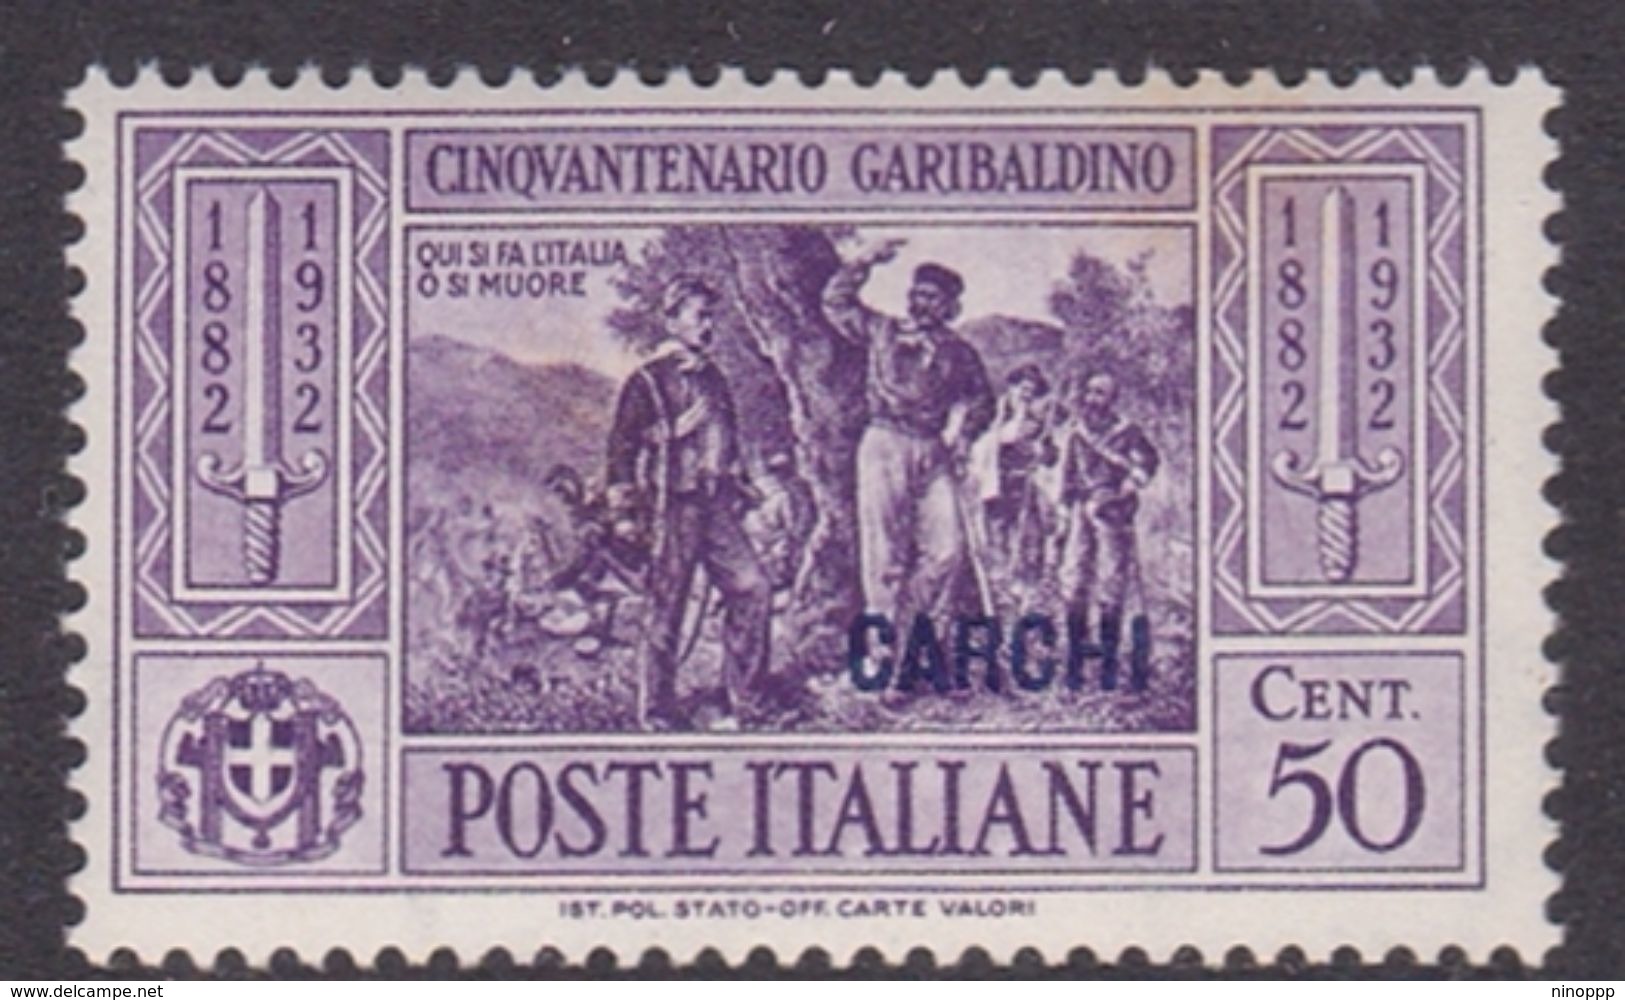 Italy-Colonies And Territories-Aegean-Carchi S 21 1932 Garibaldi 50c Violet MNH - Egée (Carchi)